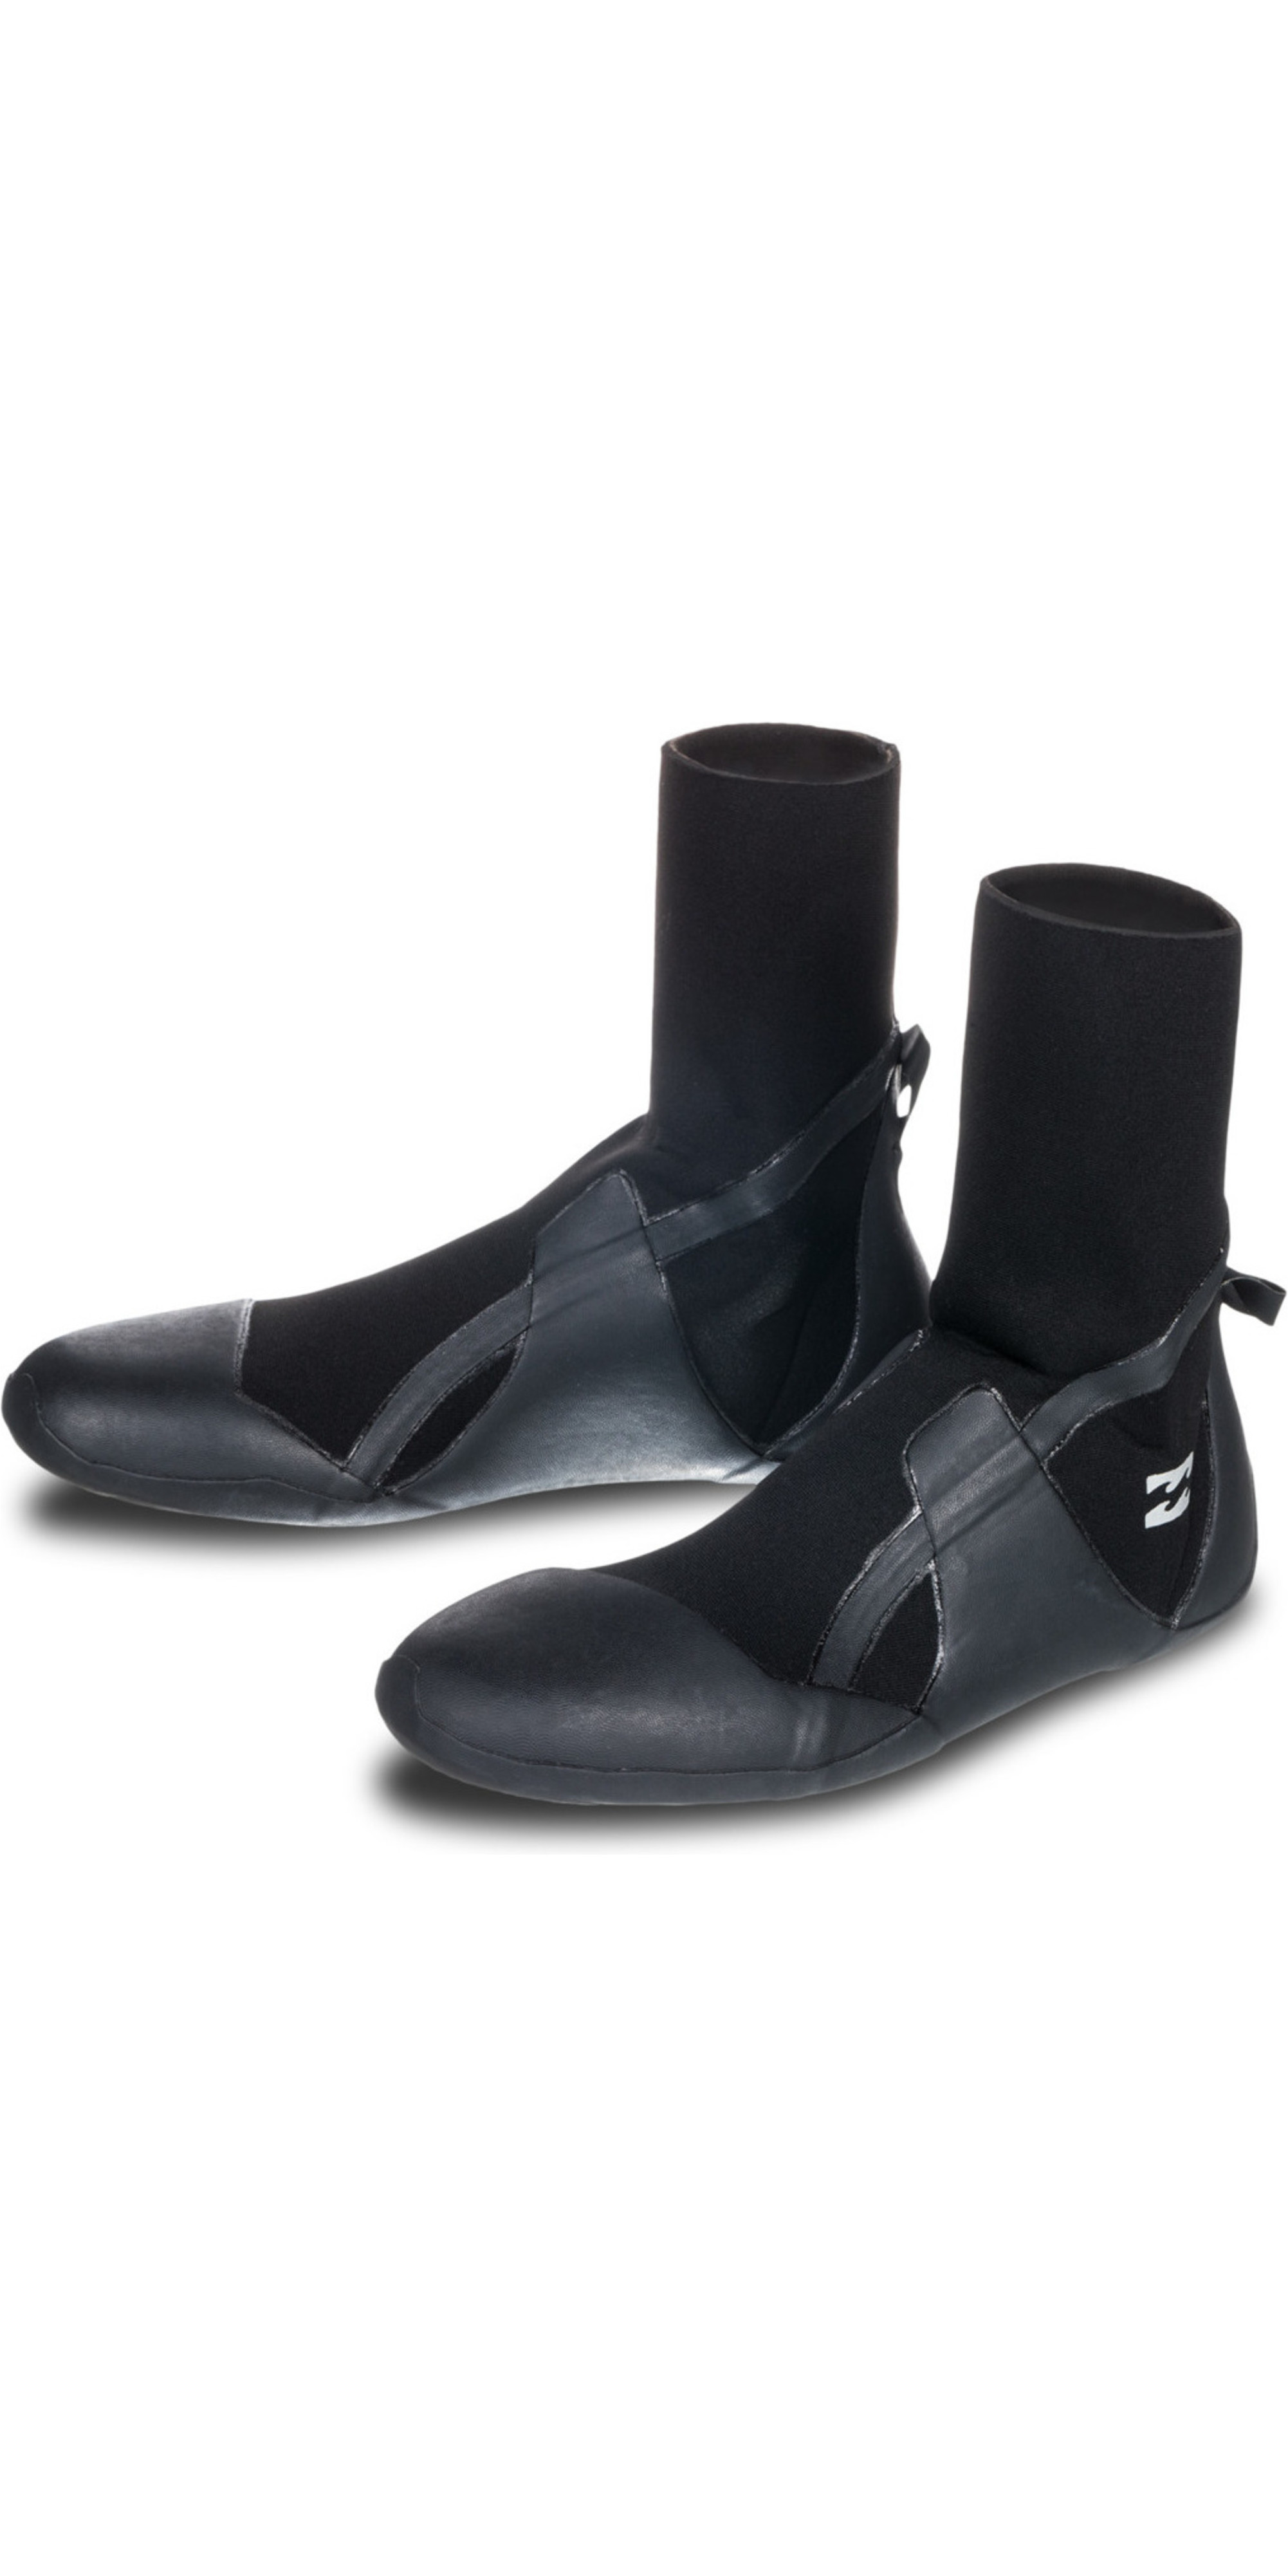 2022 Billabong Absolute 3mm Round Toe Wetsuit Boots Z4BT21 - Black